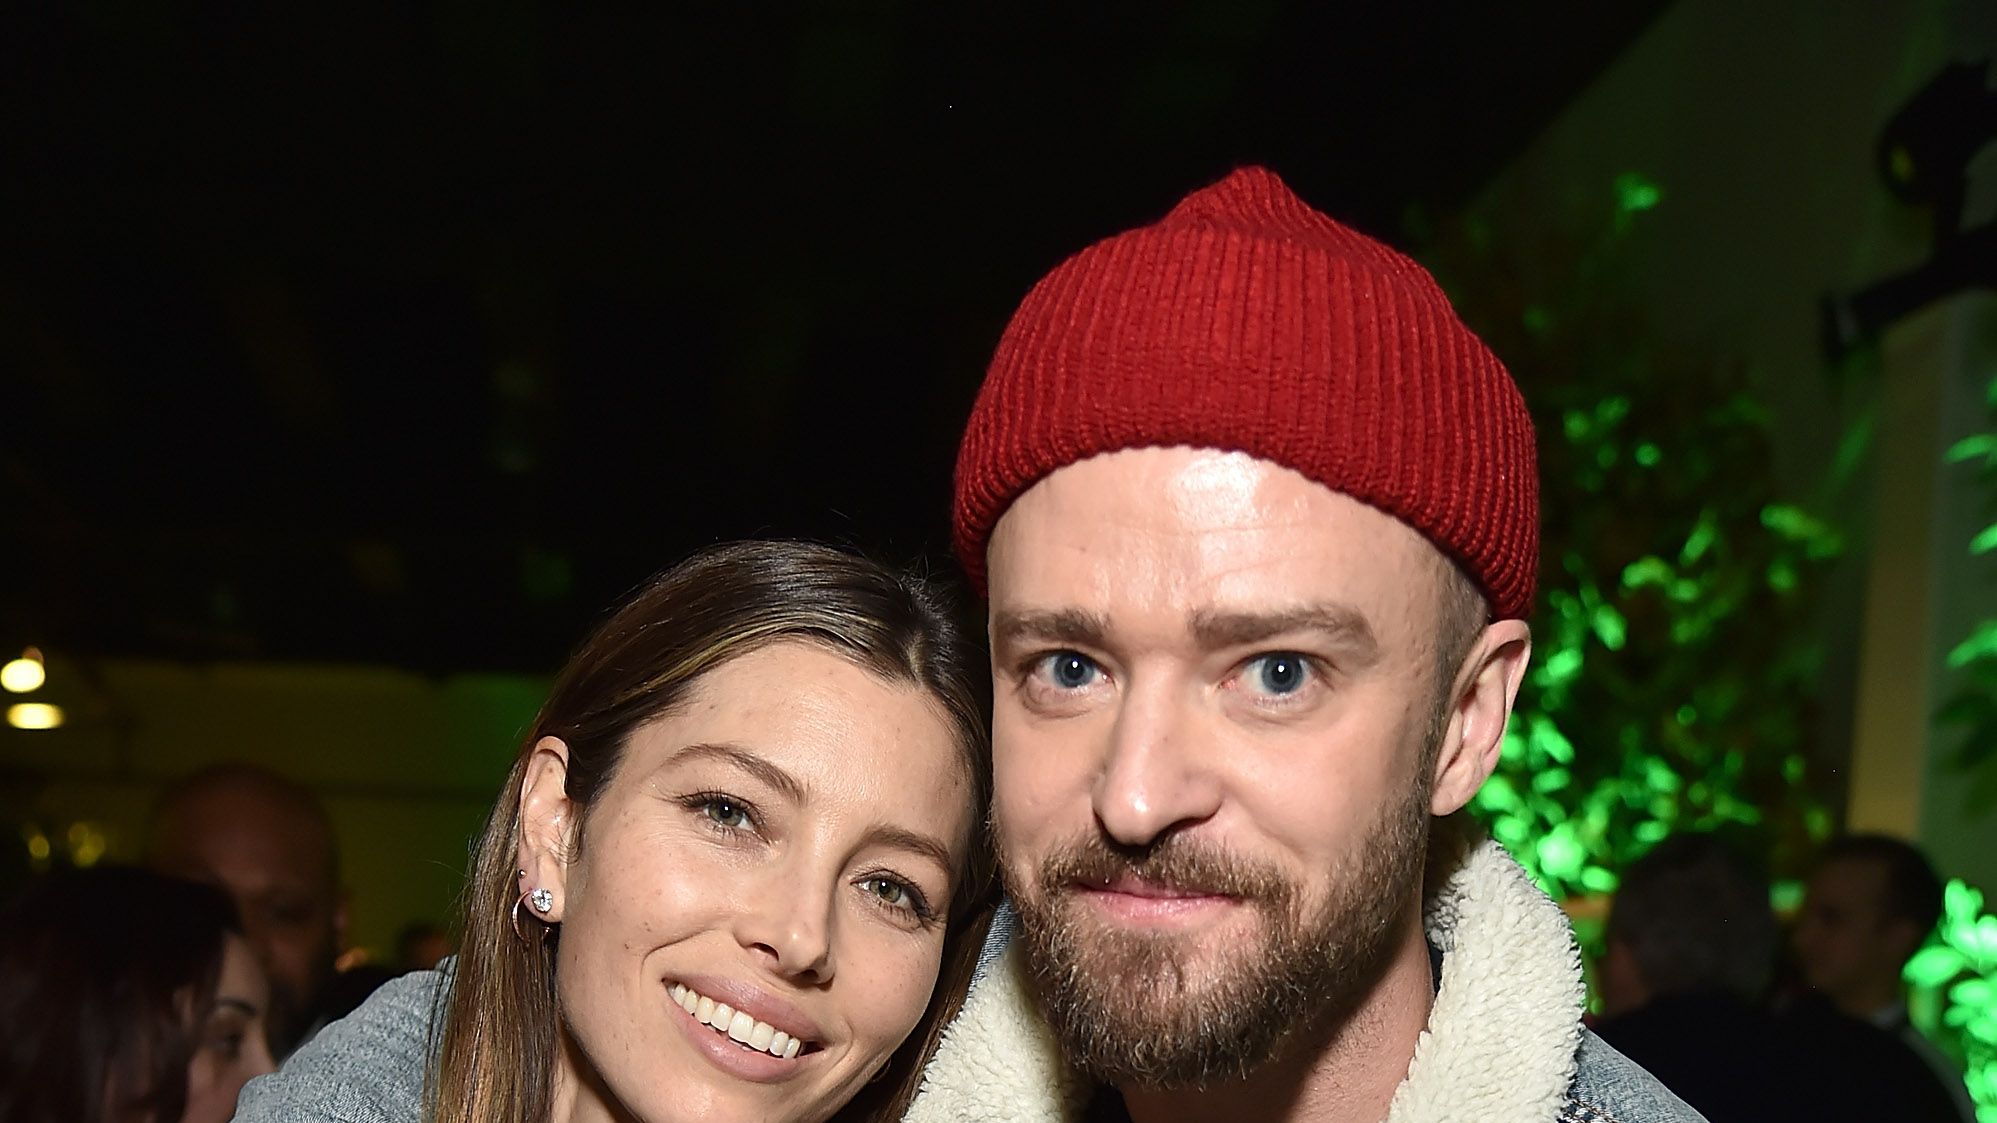 Justin Timberlake Returns to Work After Alisha Wainwright PDA